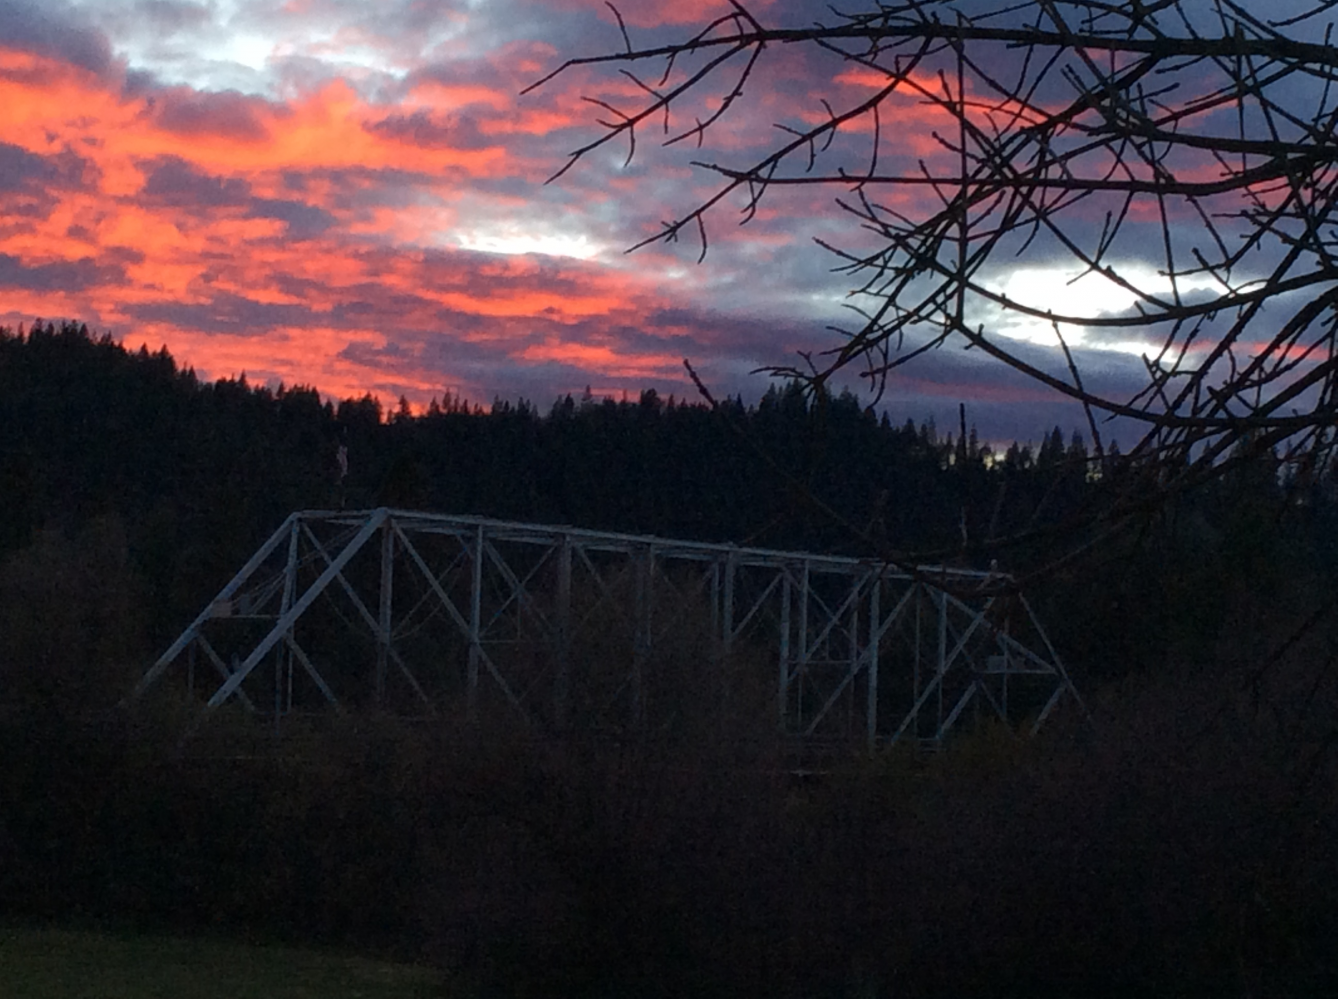 Sunset over the bridge